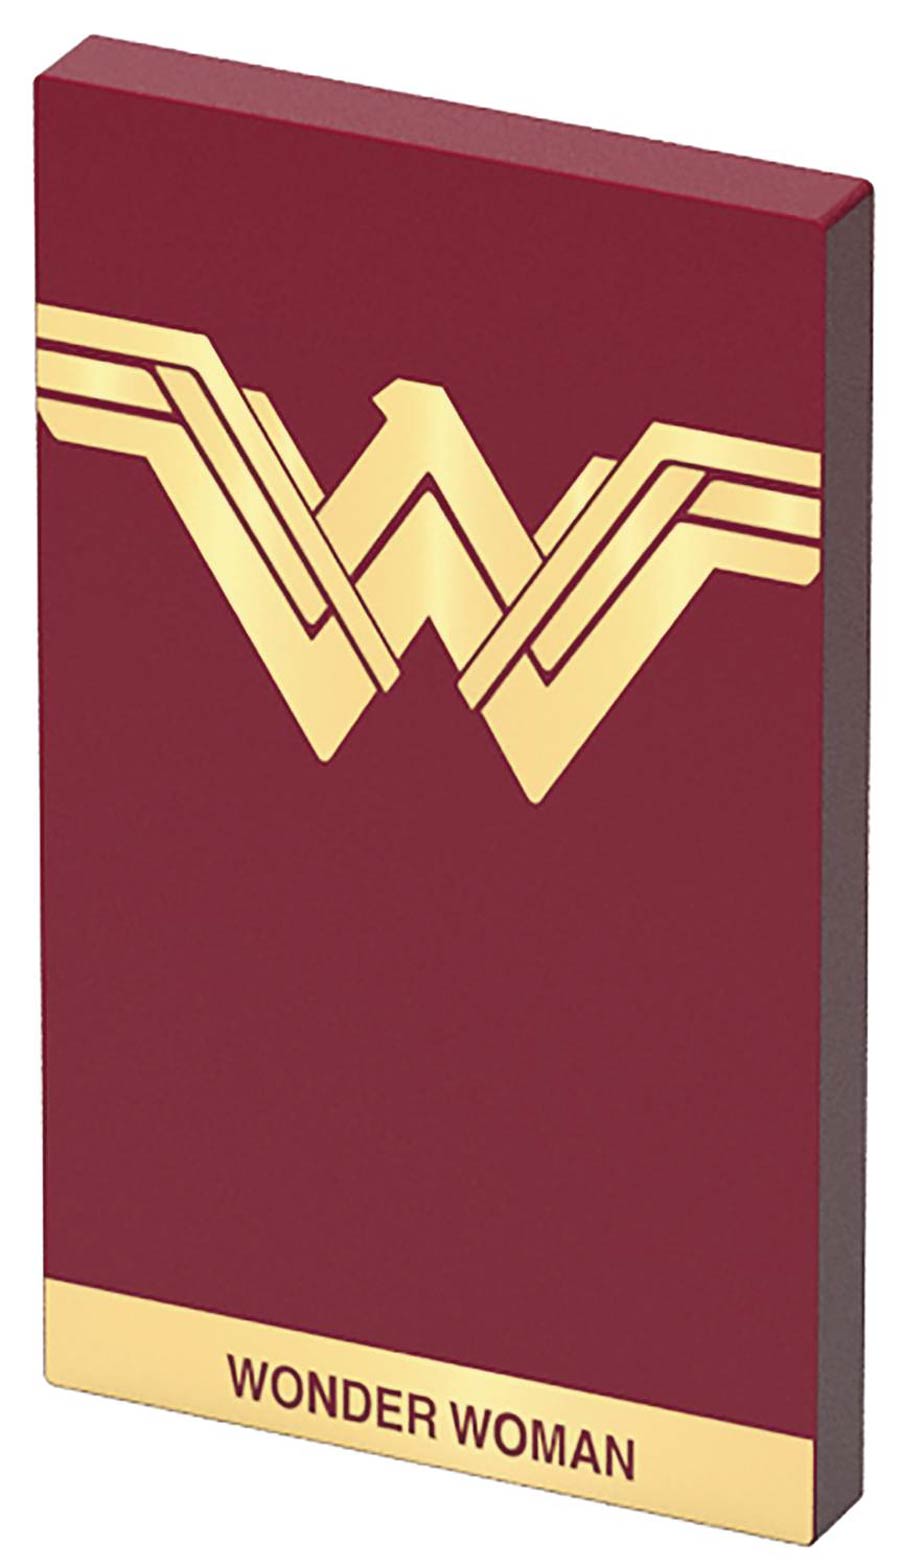 DC Heroes 4000 mAh Portable Power Bank - Wonder Woman